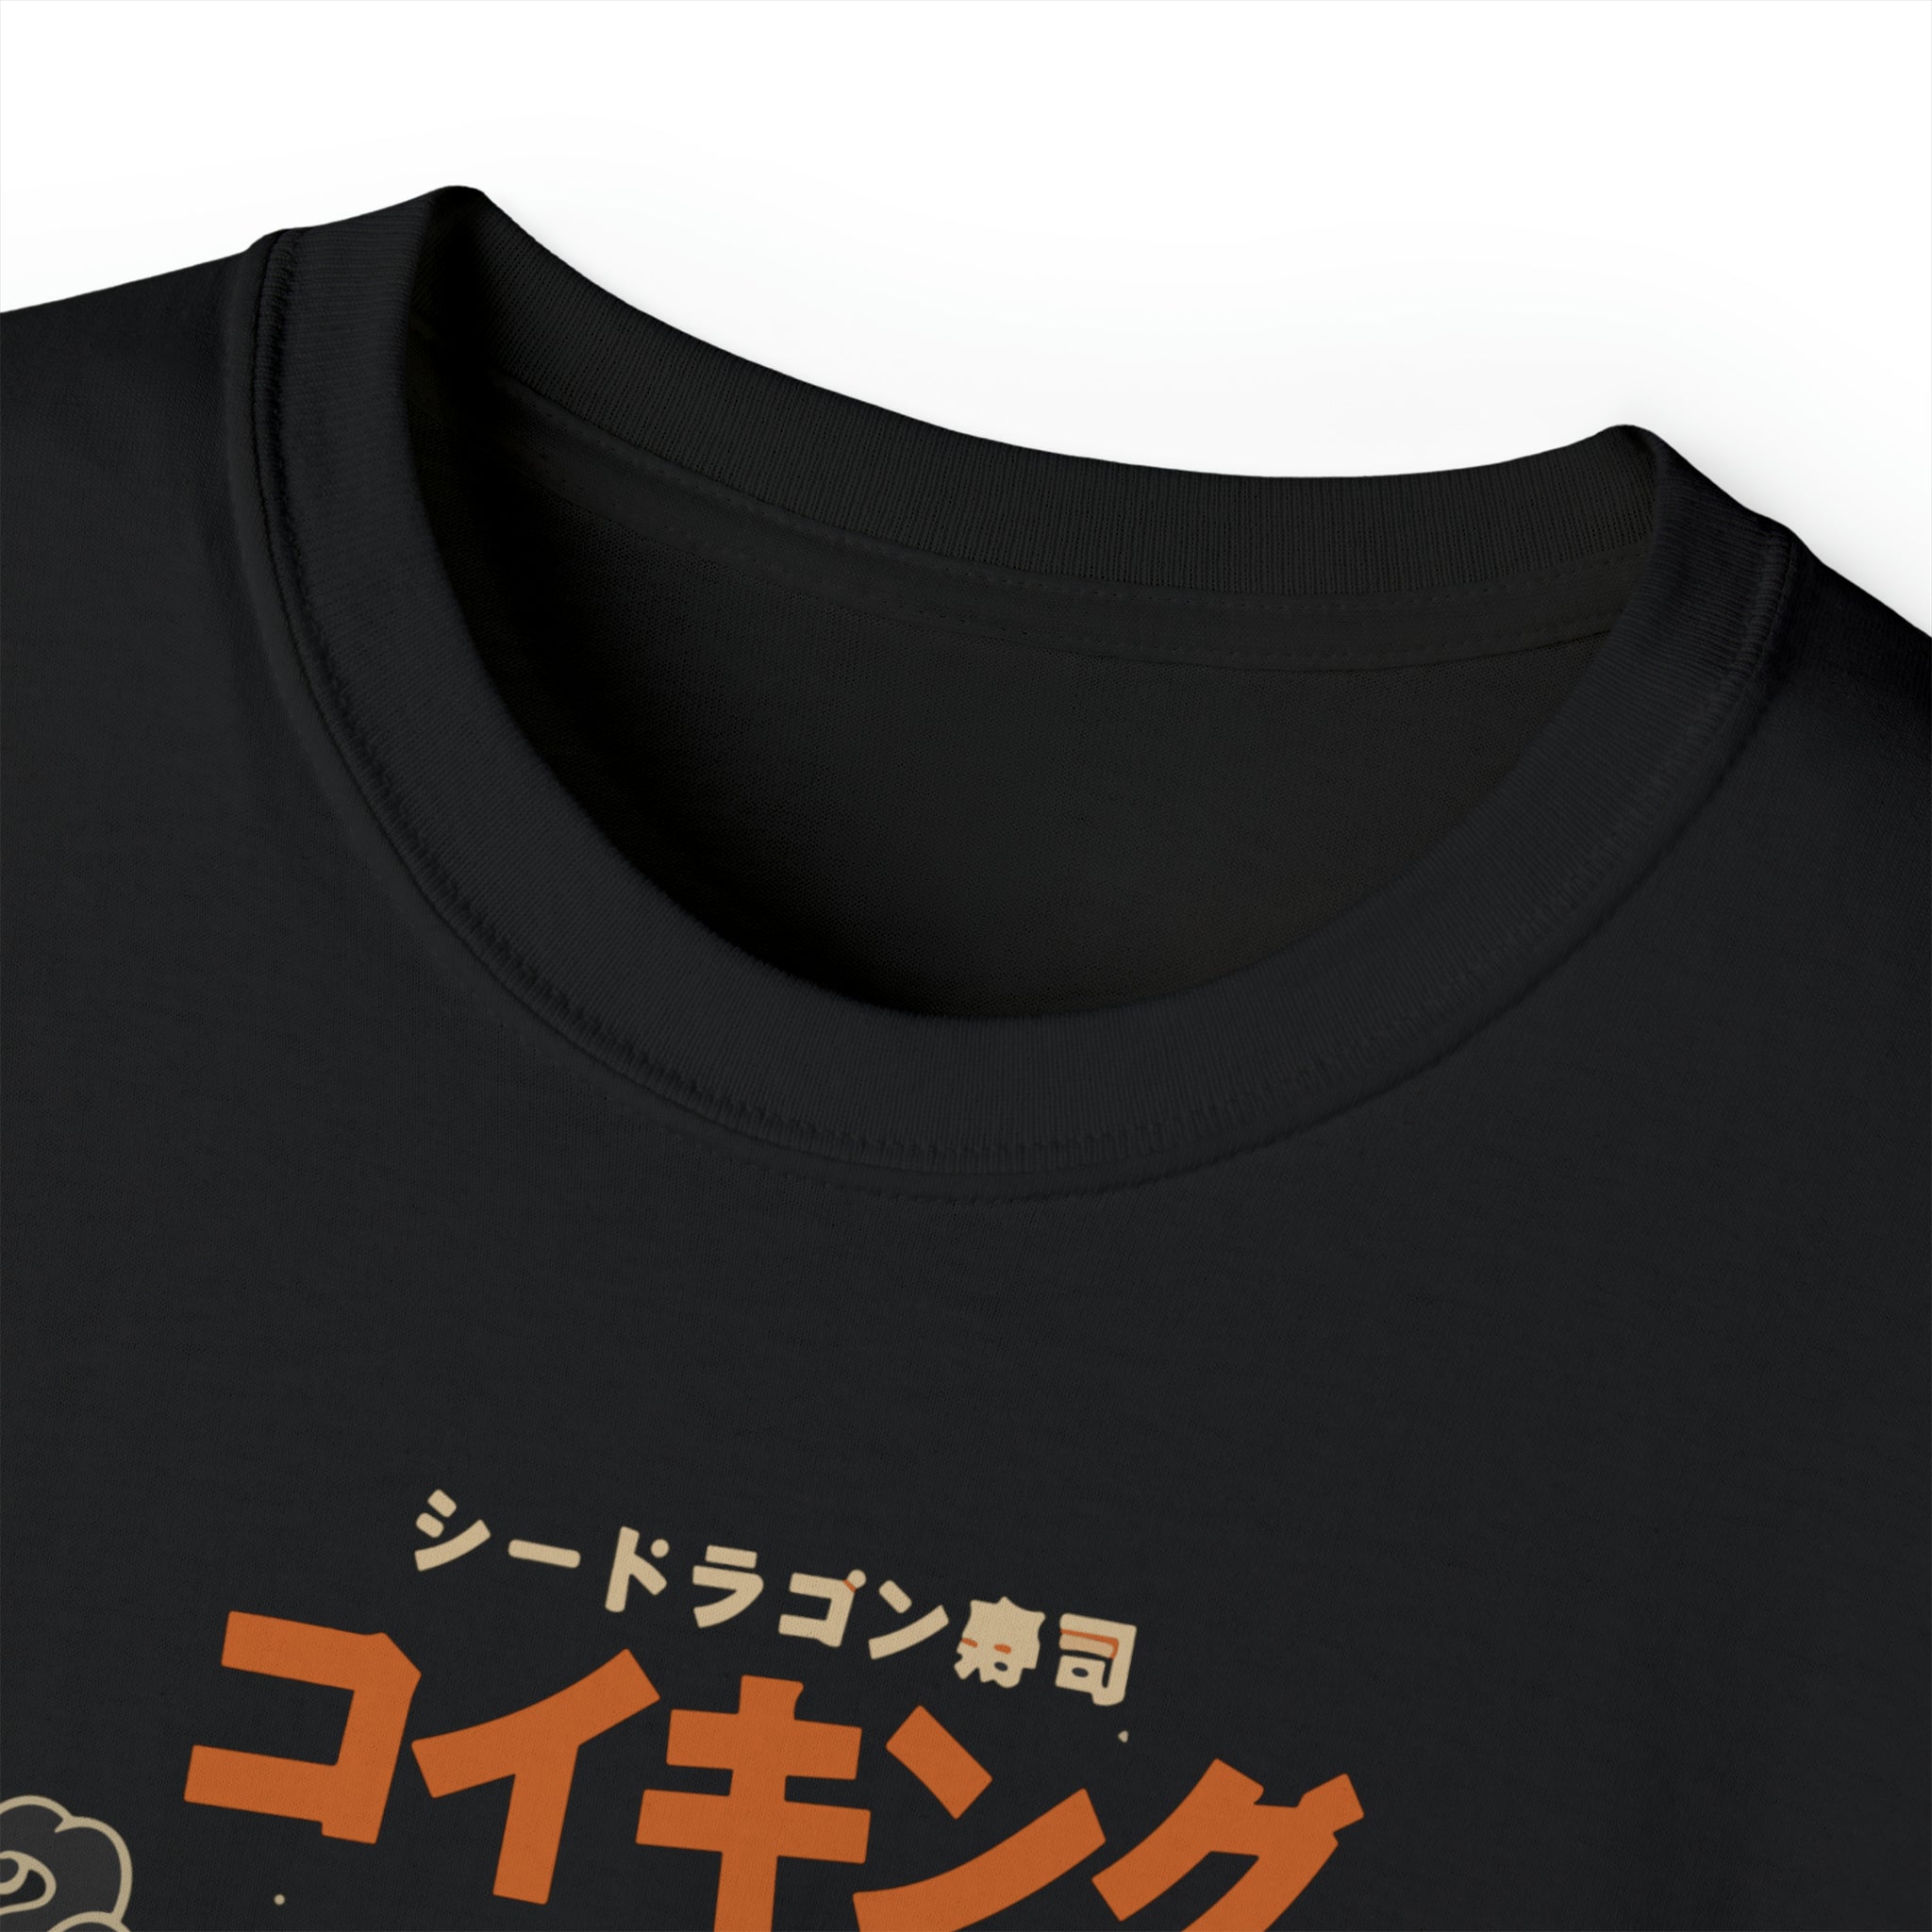 Sushicarp Anime T-shirt